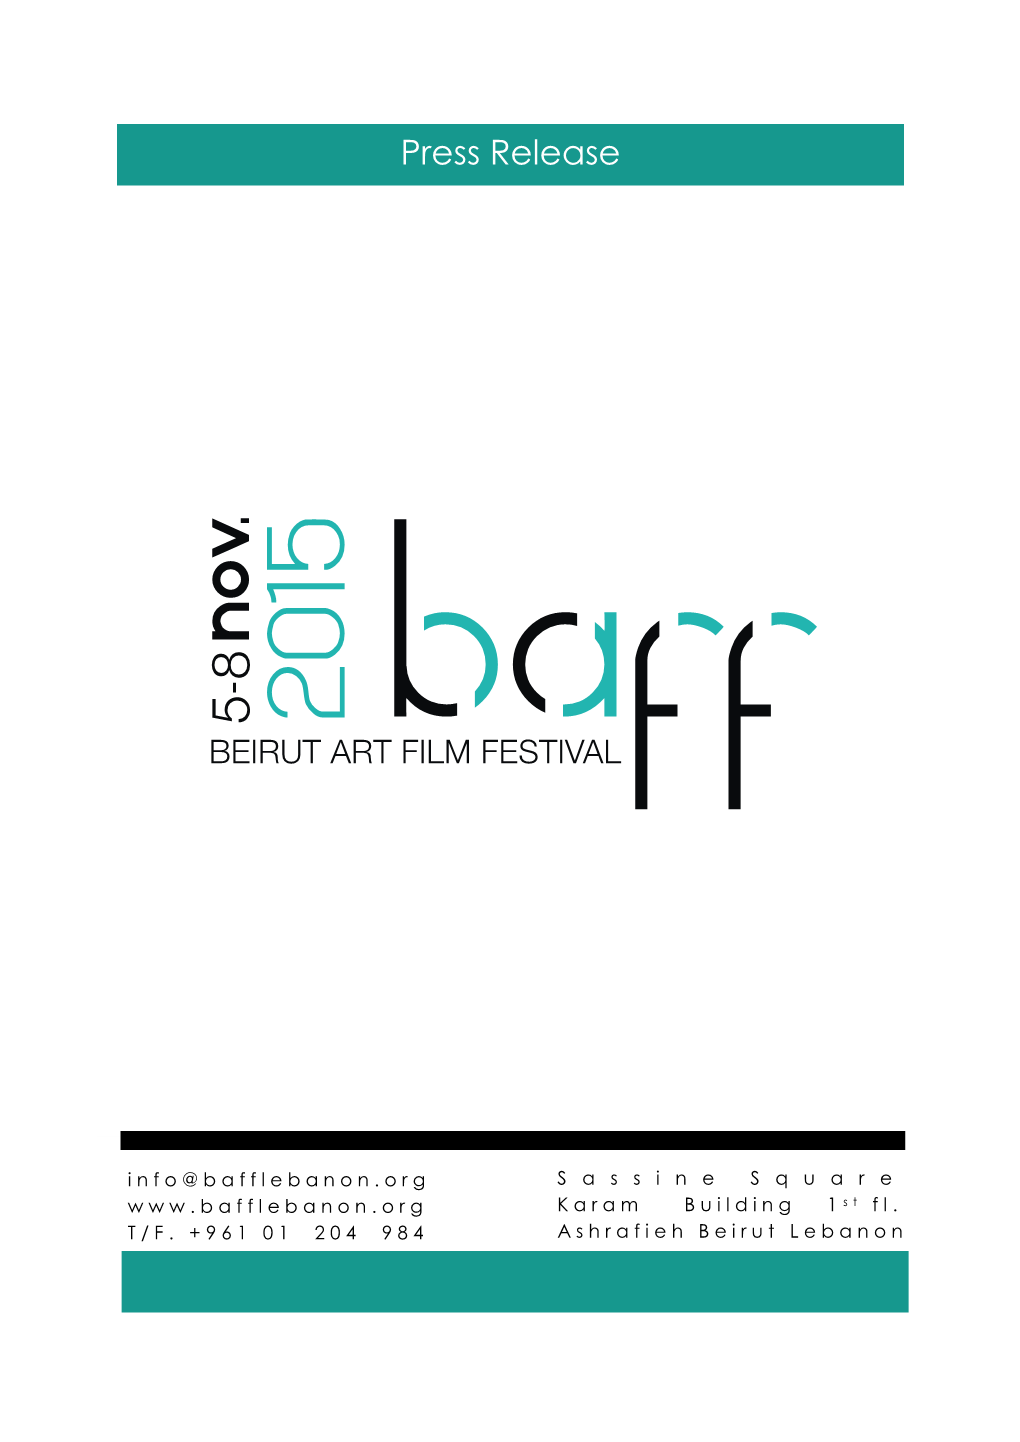 Press Release of the Festival